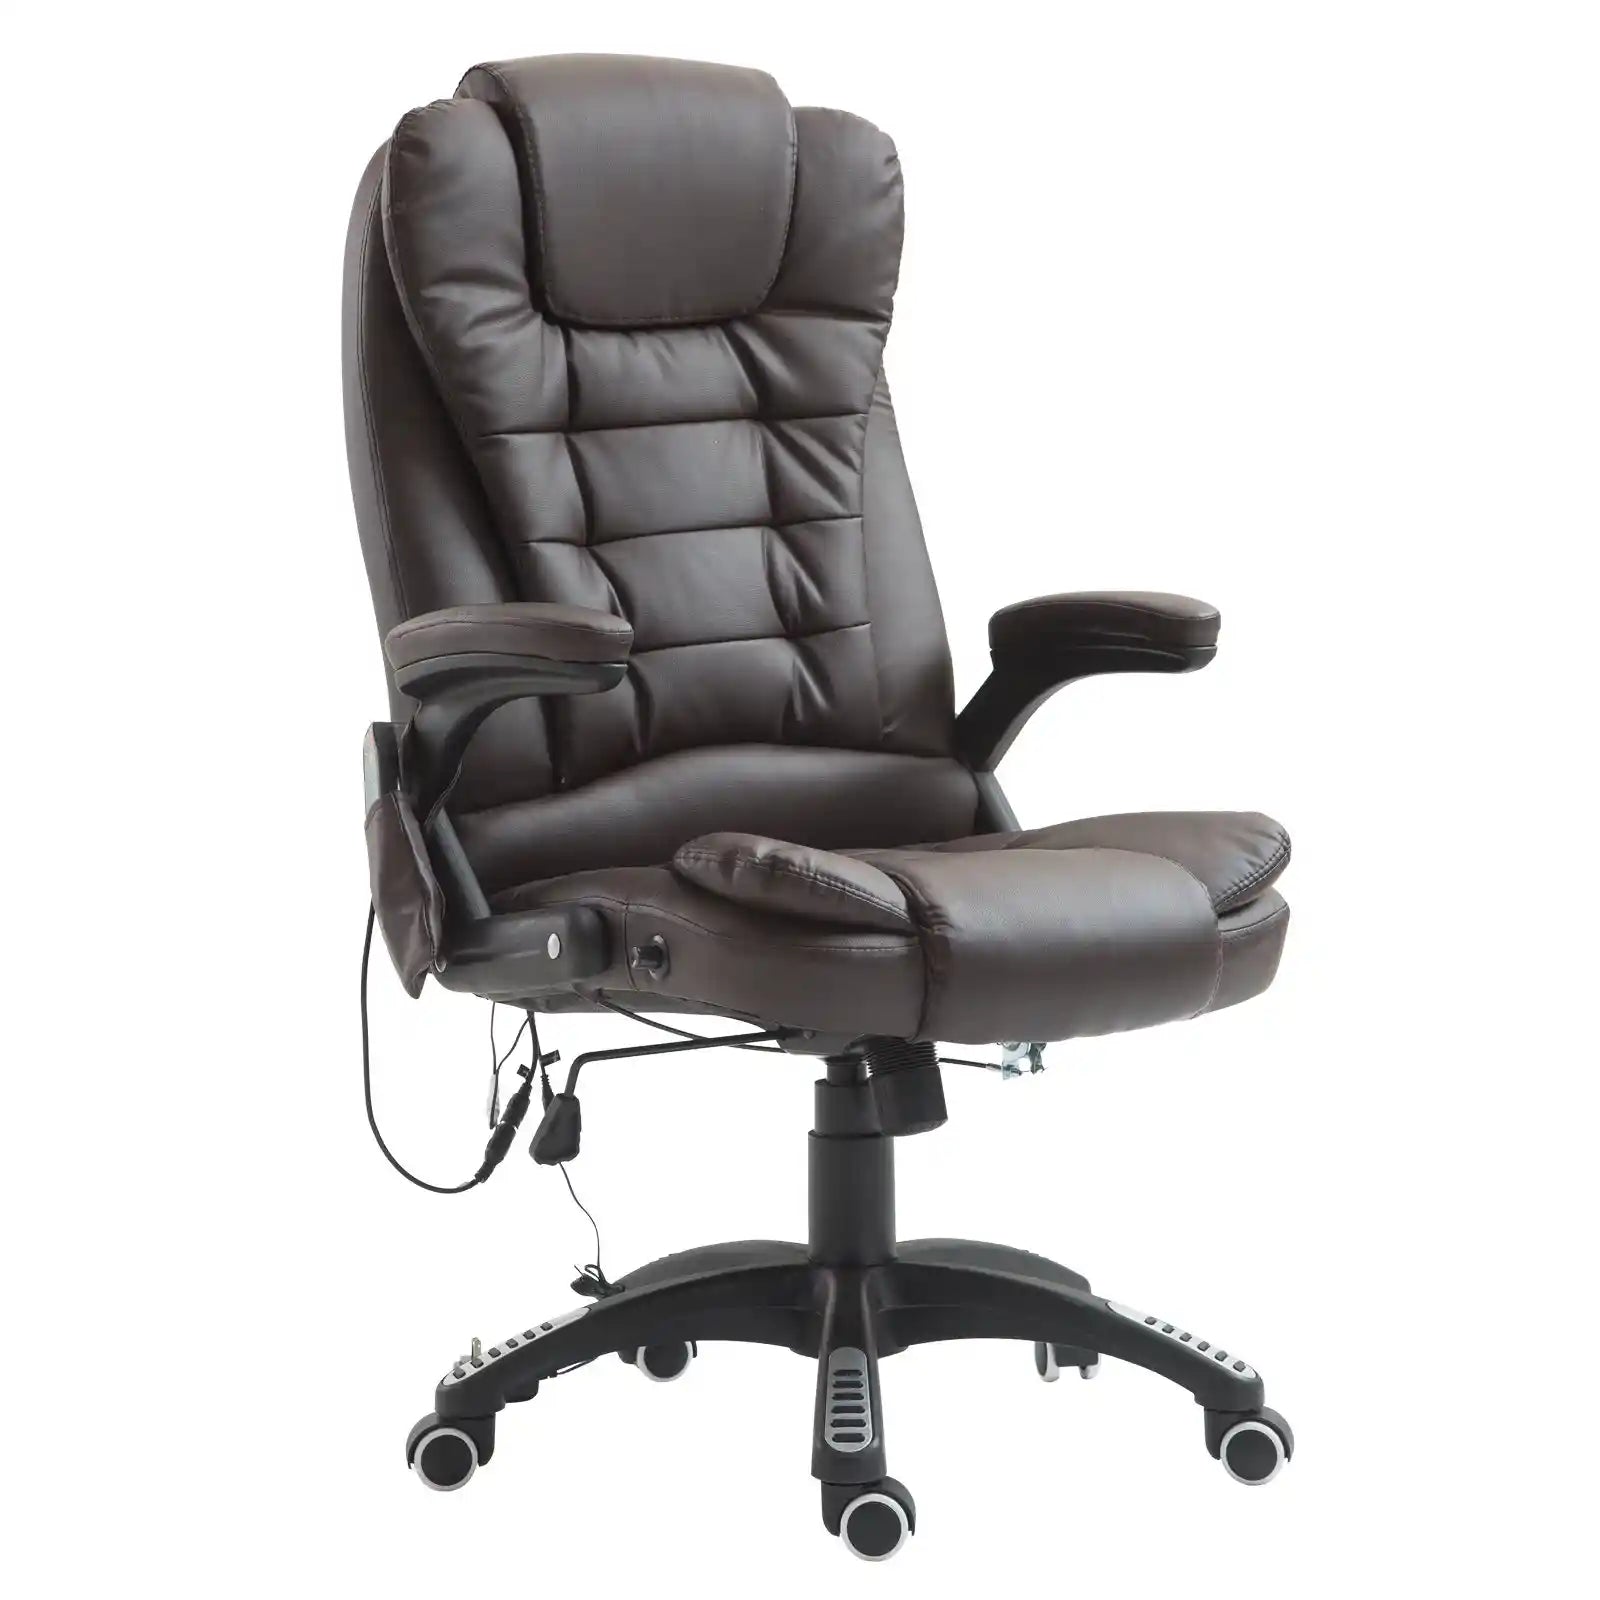 Executive Office Massage Chair Ergonomic Heated Vibrating